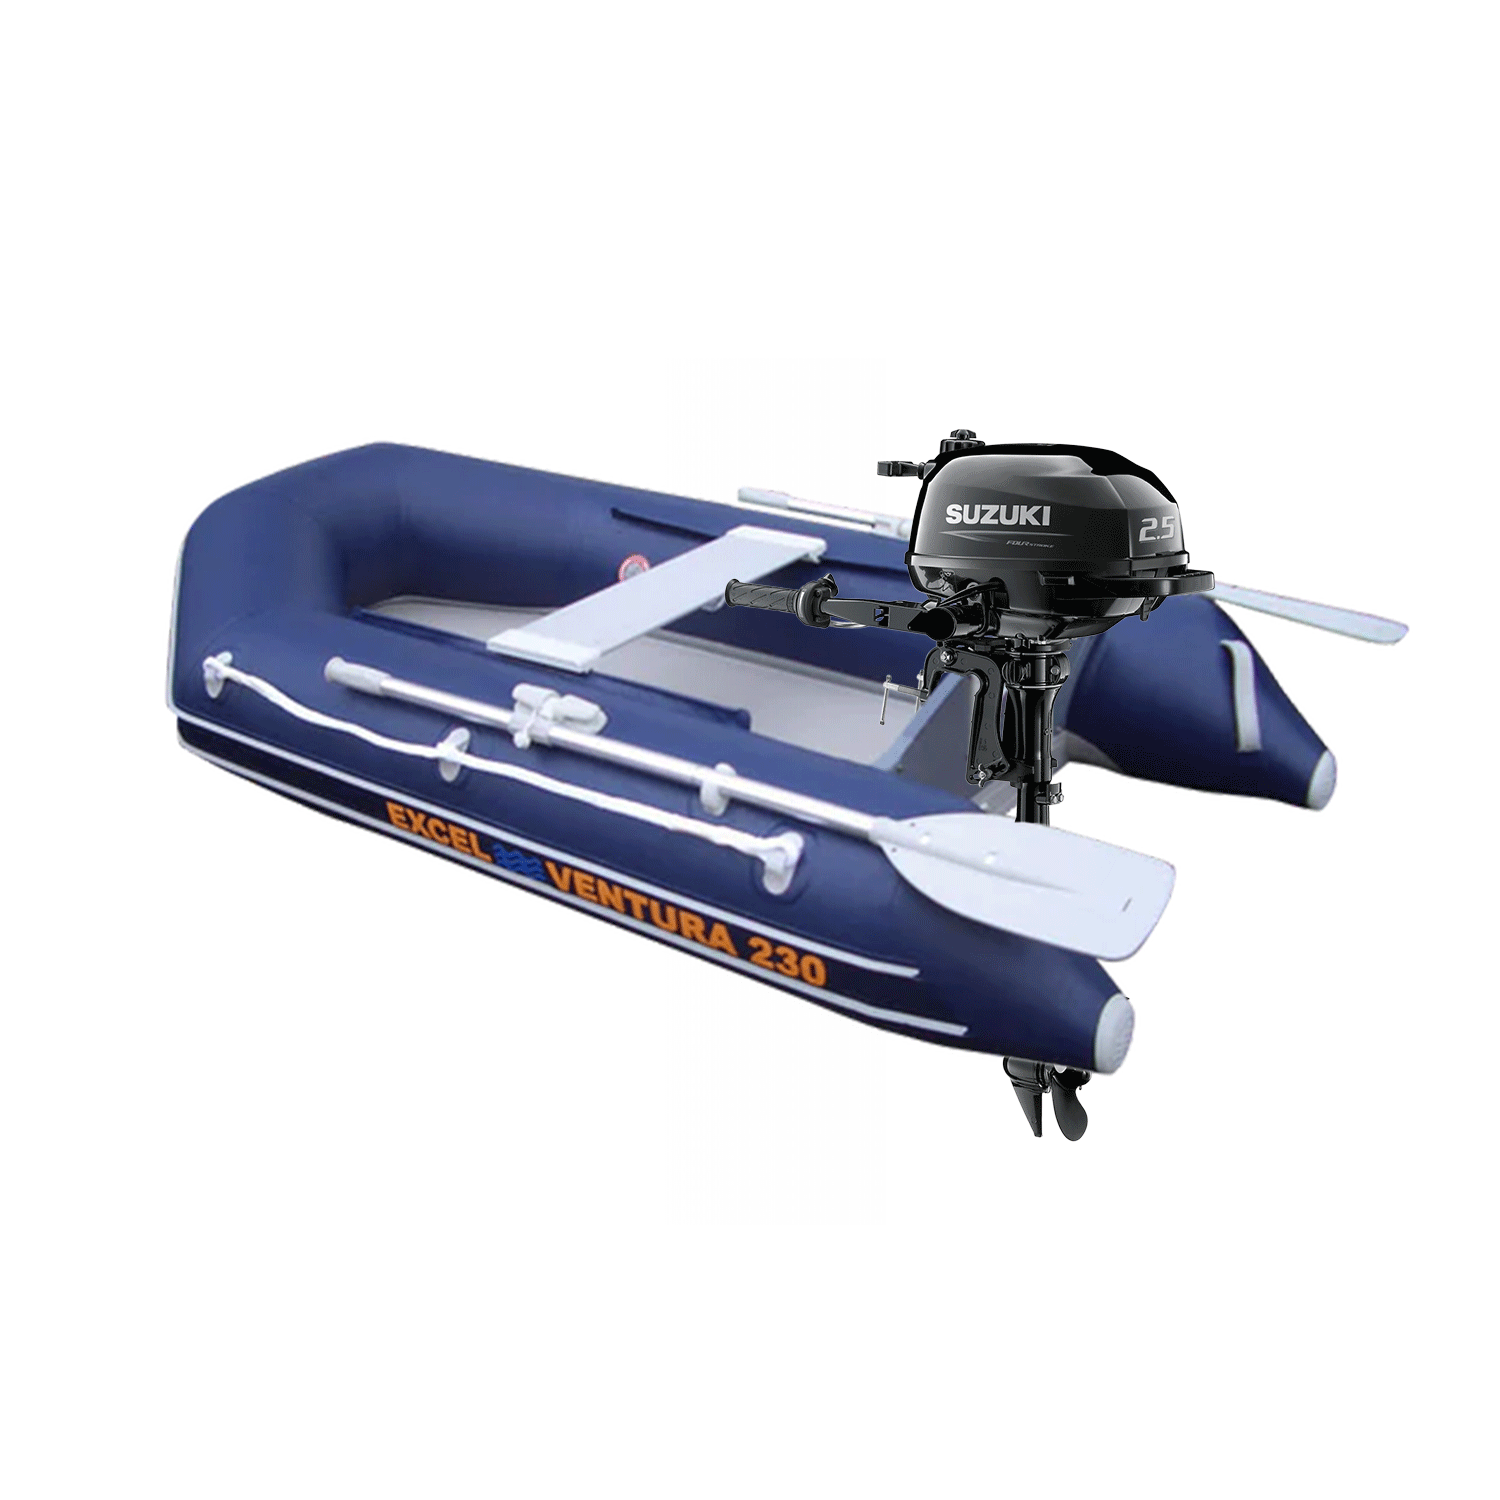 EXCEL Ventura 230 Inflatable Boat & Suzuki 2.5 HP Outboard Engine Bundle